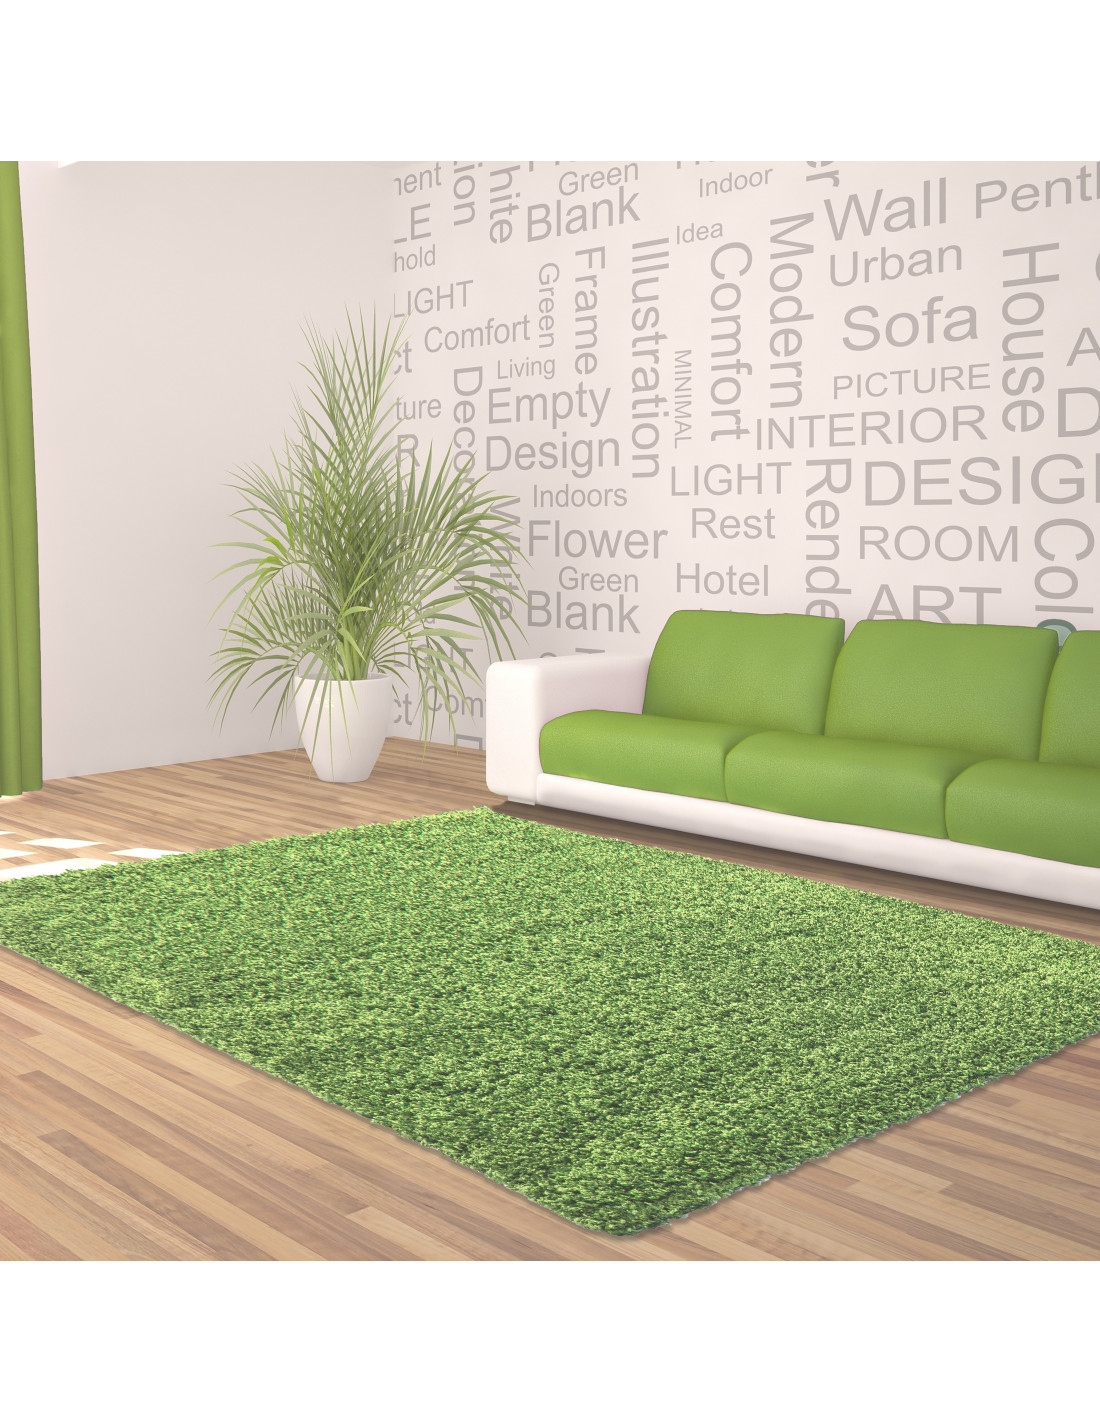 Deep pile long pile living room DREAM Shaggy rug uni color pile height 5cm green